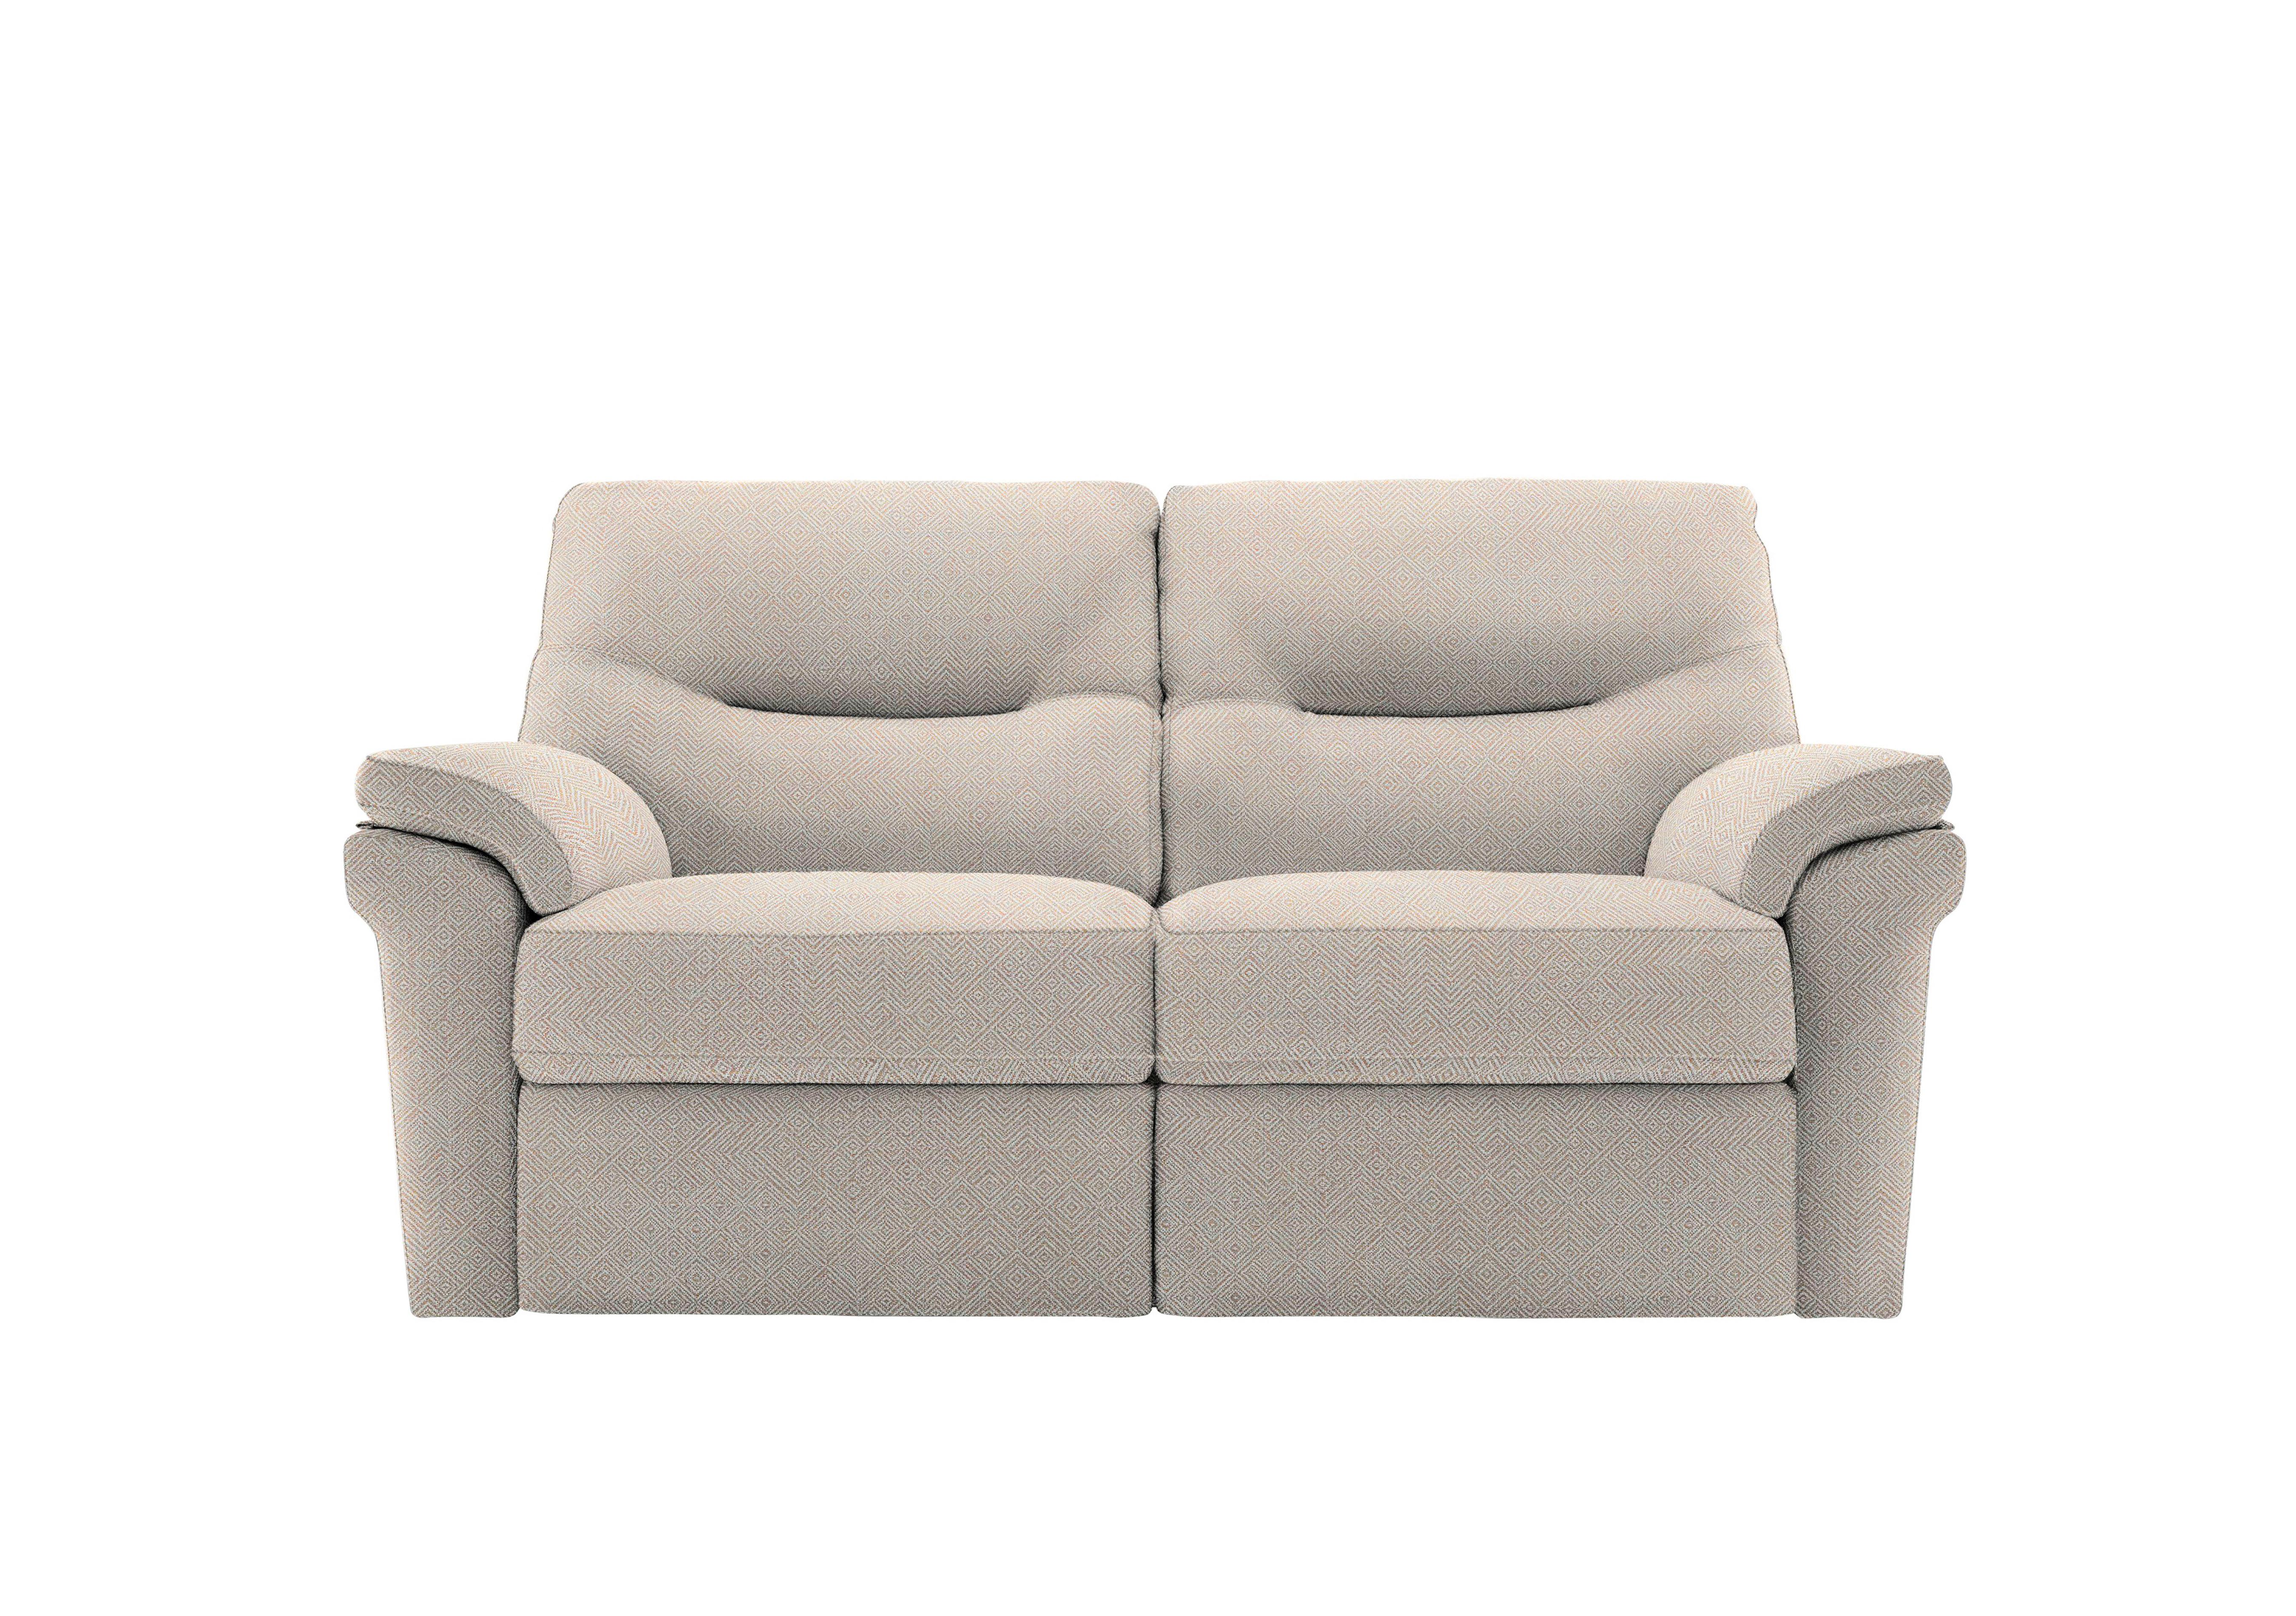 Seattle 2 Seater Fabric Sofa in B011 Nebular Blush on Furniture Village